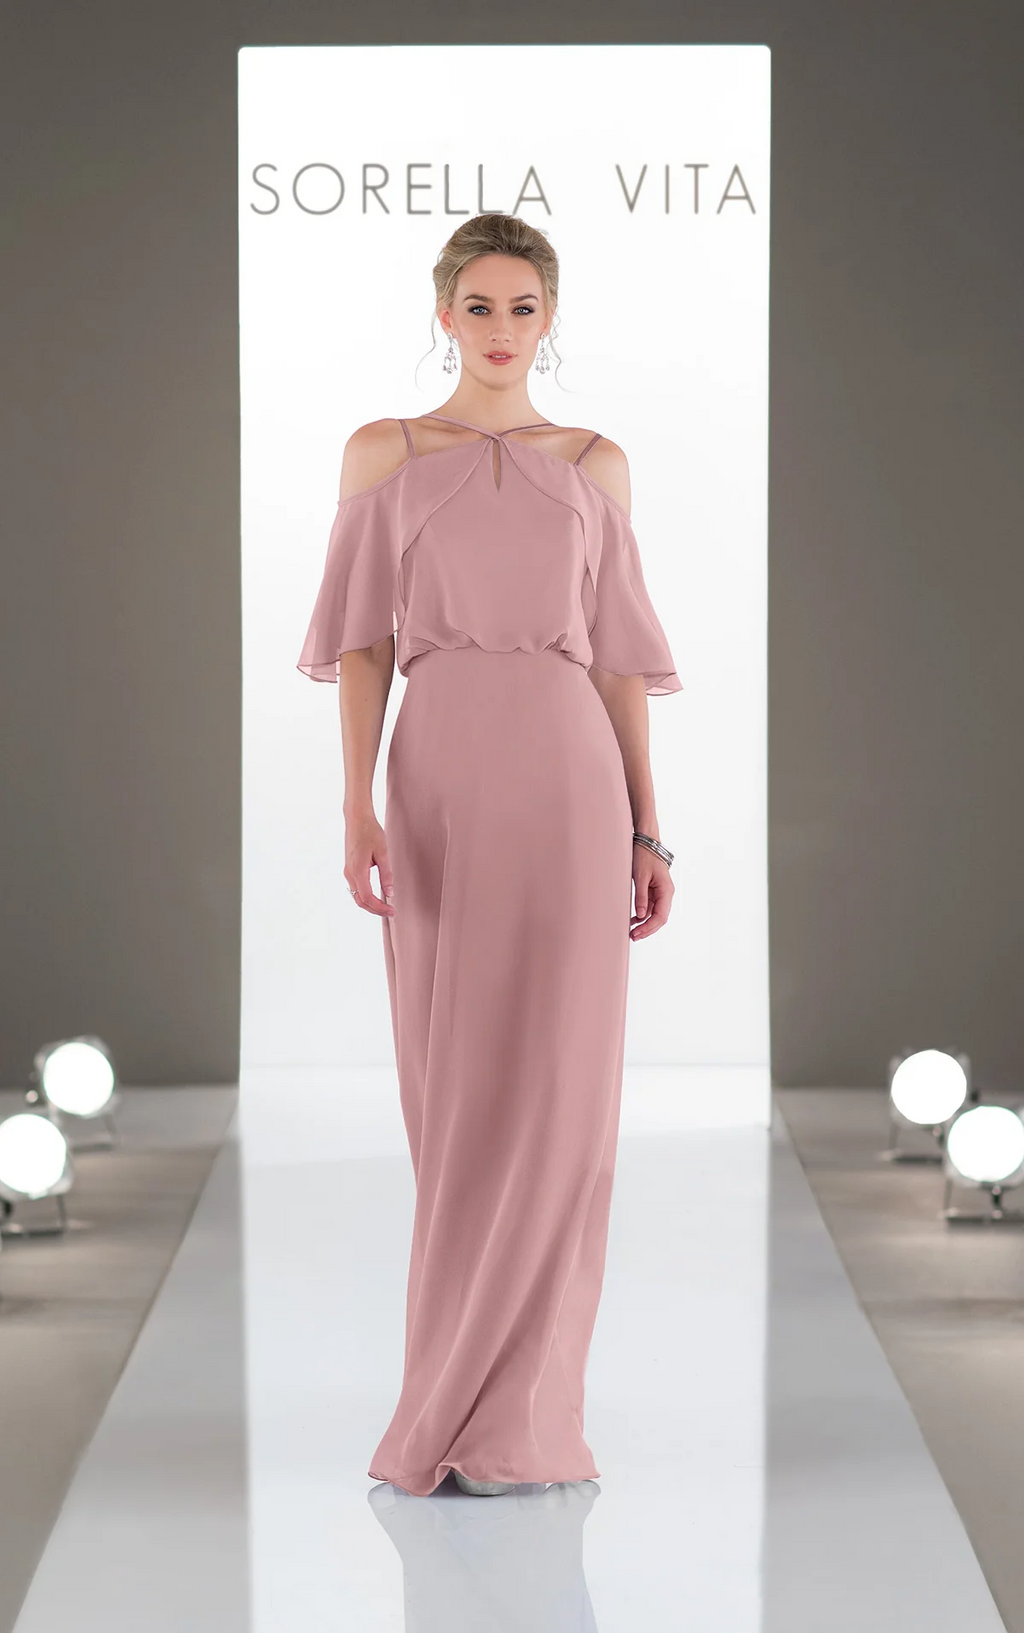 Sorella Vita Dress Style 9070 (Dusty Rose-Size 10) Prom, Ball., Black-tie, Bridesmaid, Pageant